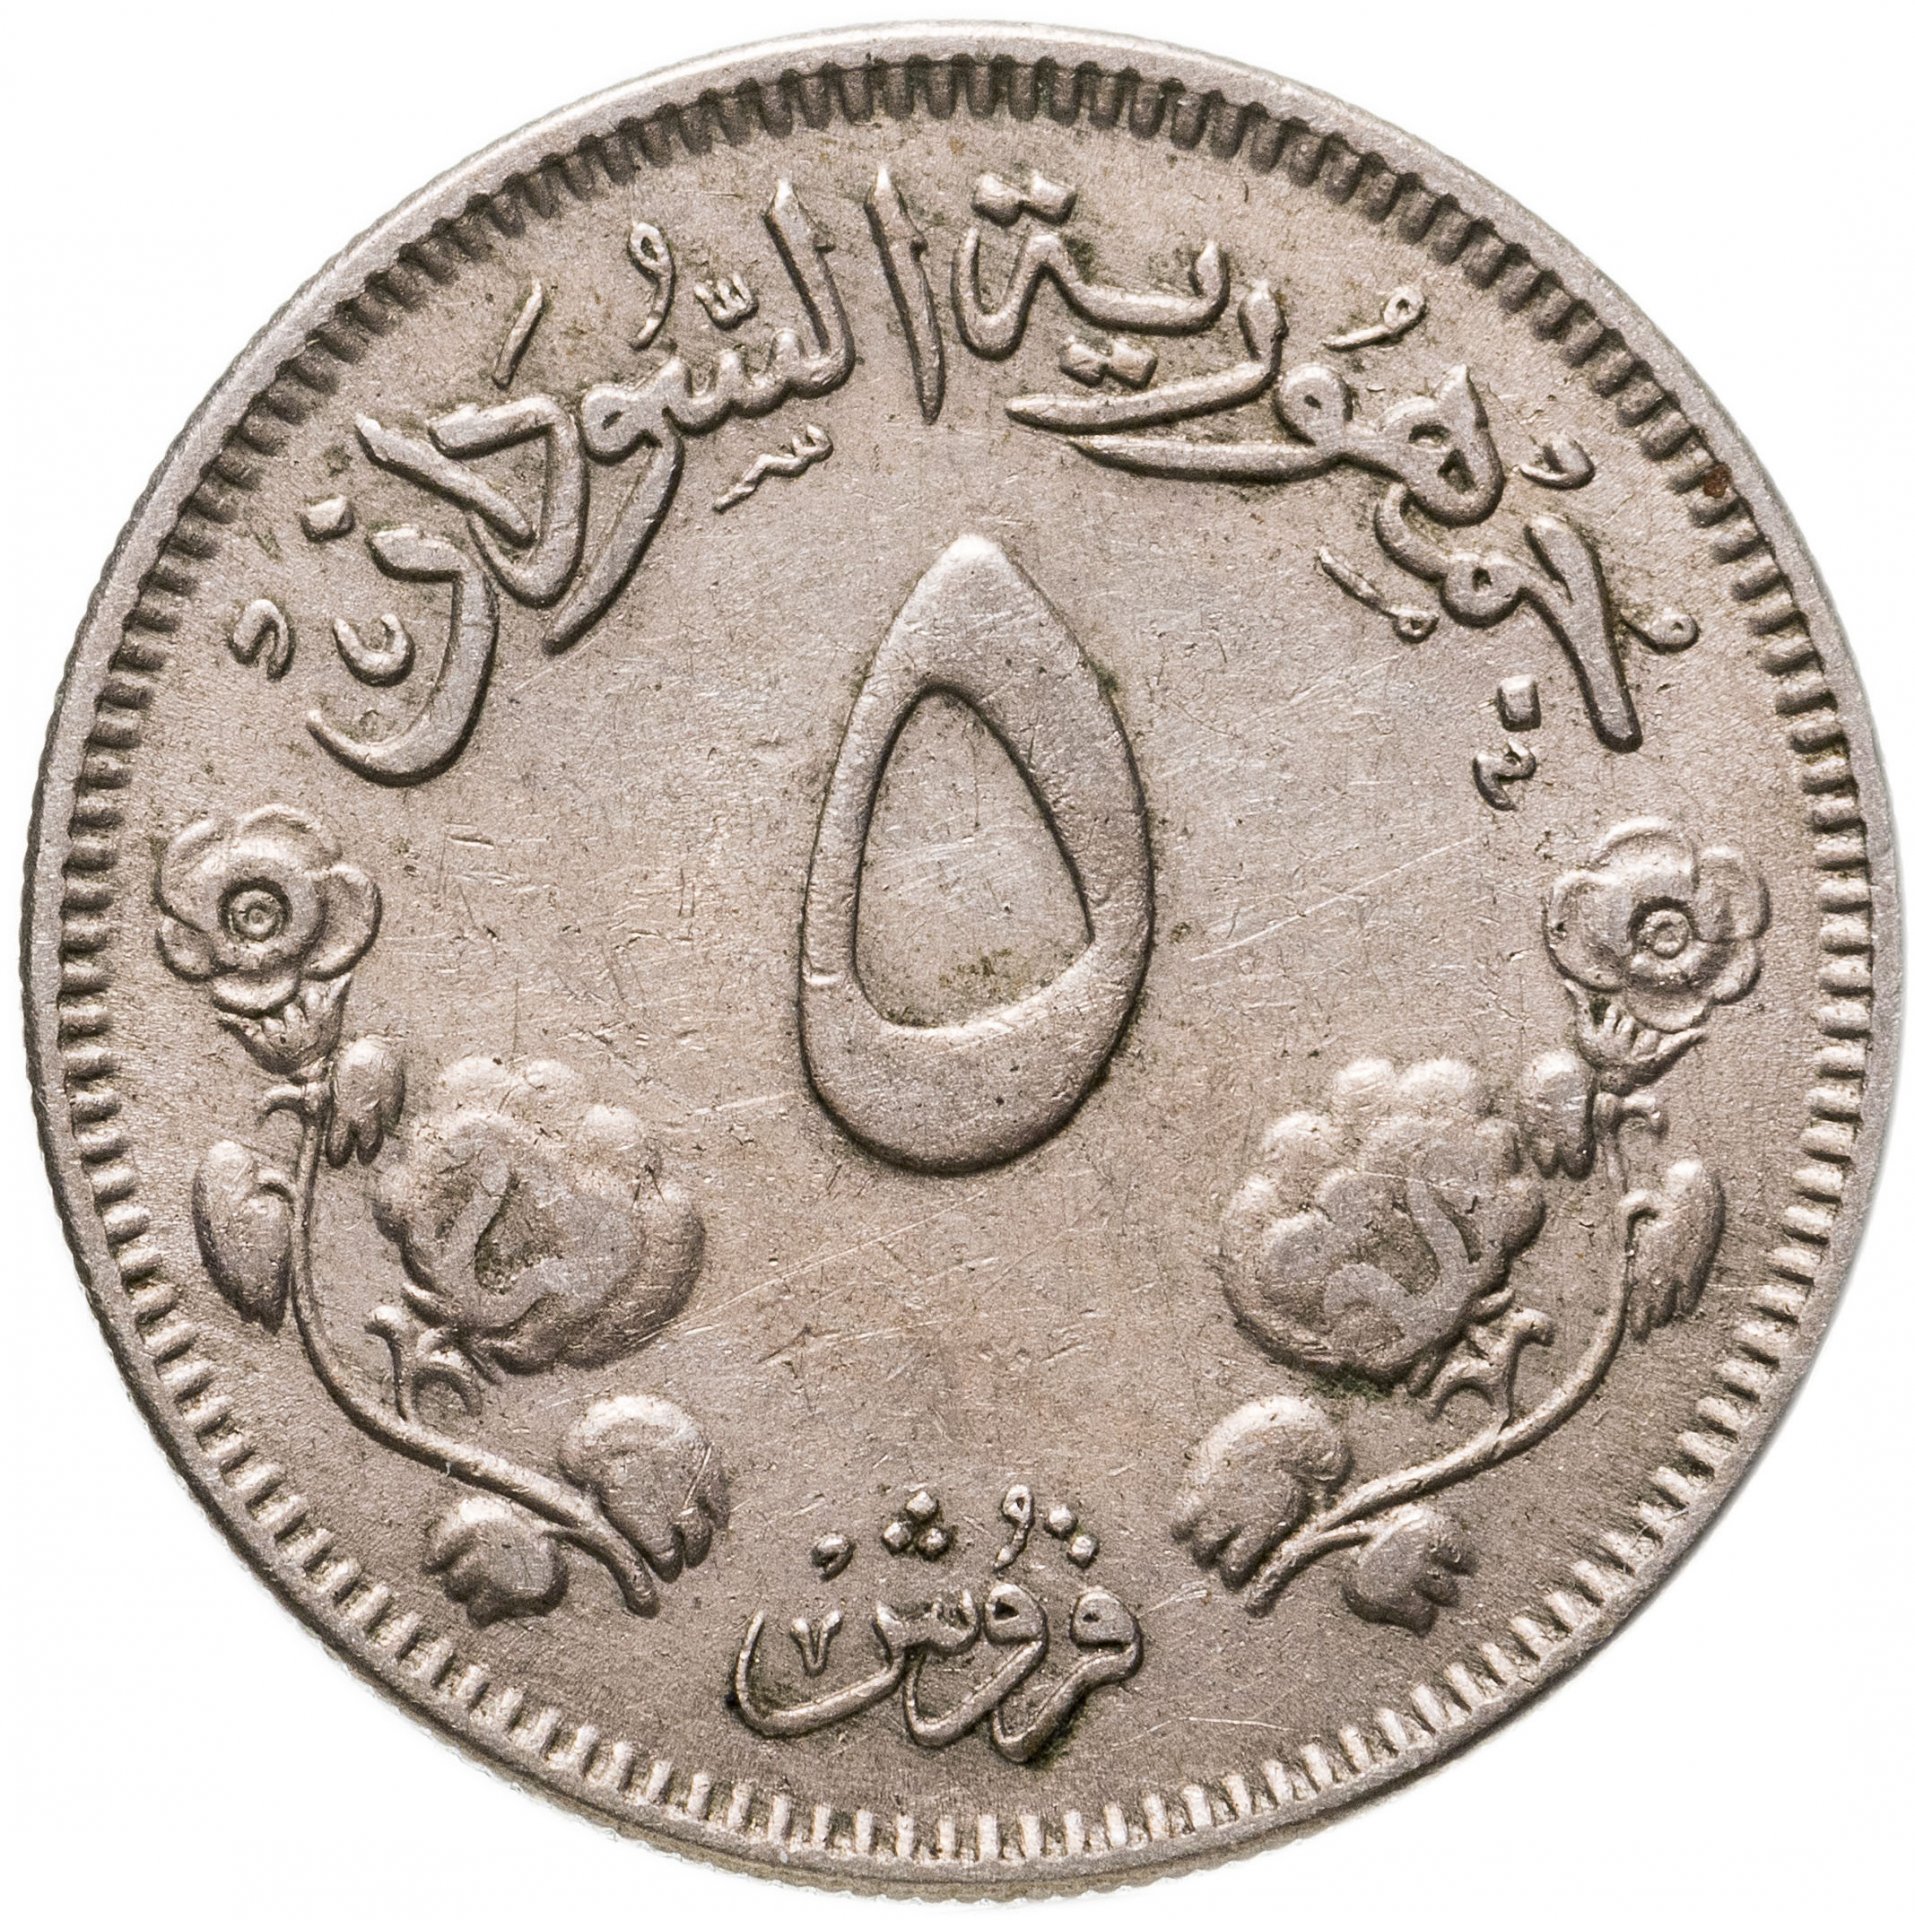 монеты судана каталог с фотографиями и названиями